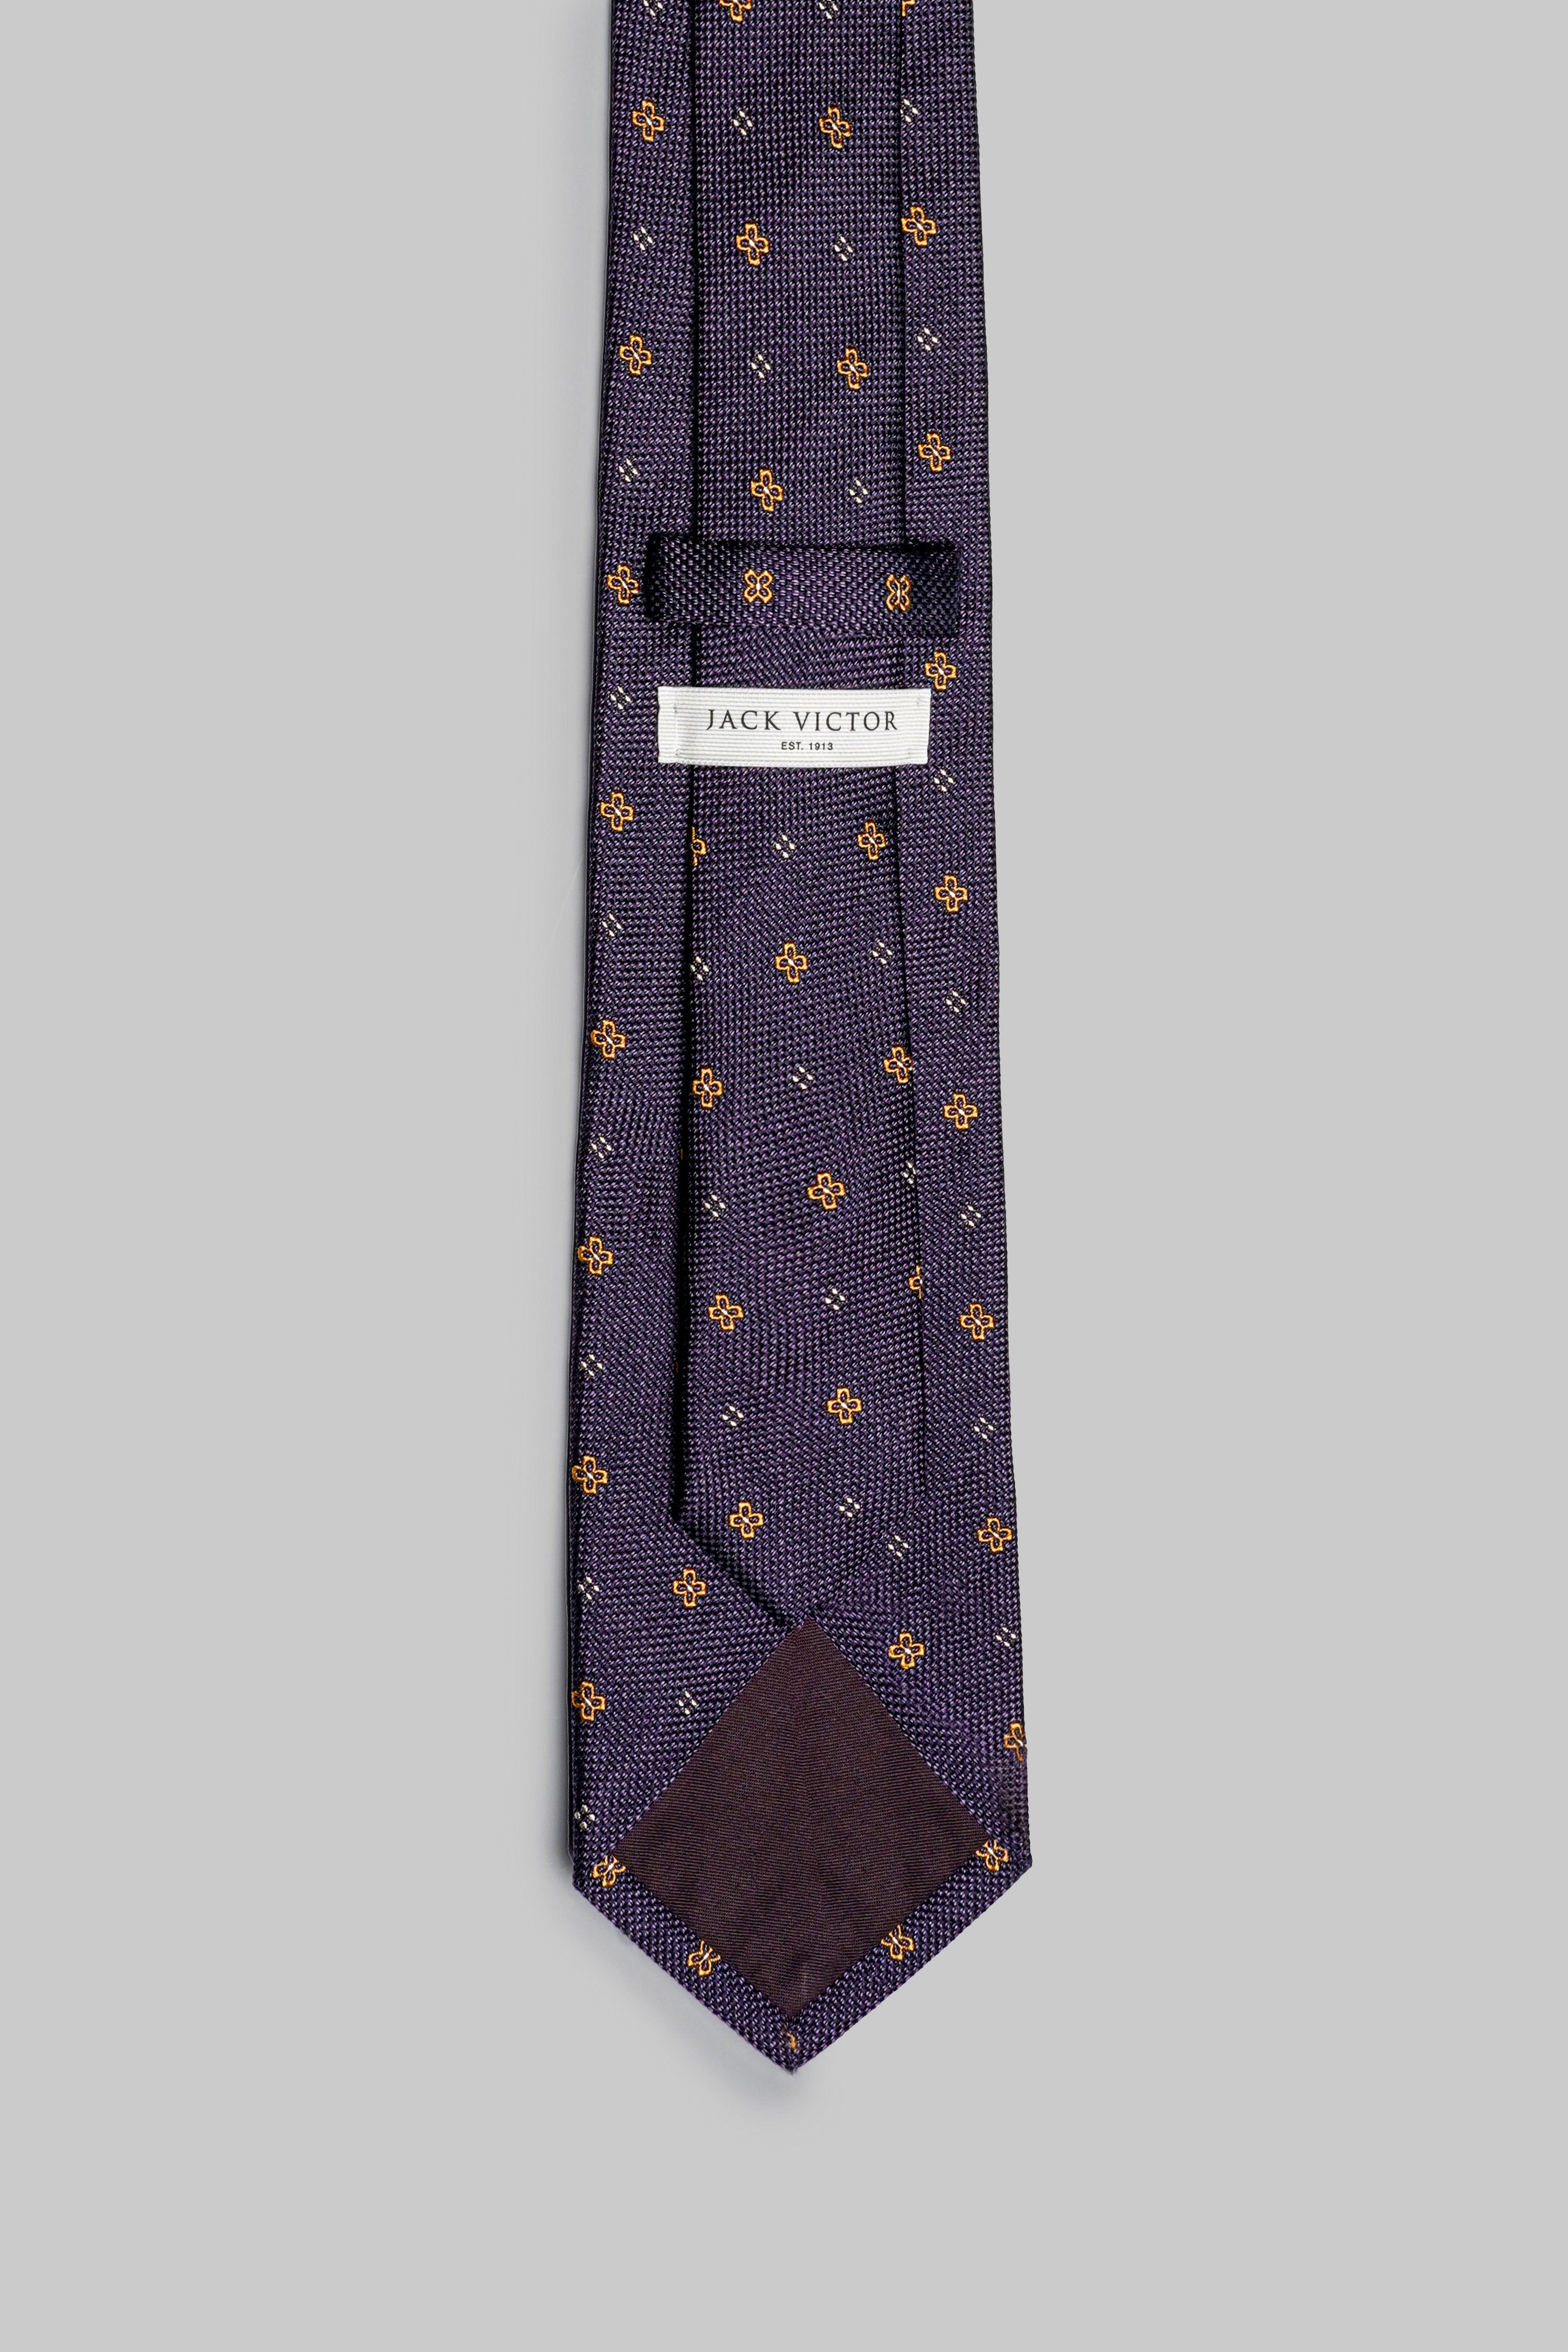 Vue alternative 2 St. George cravate en soie en violet